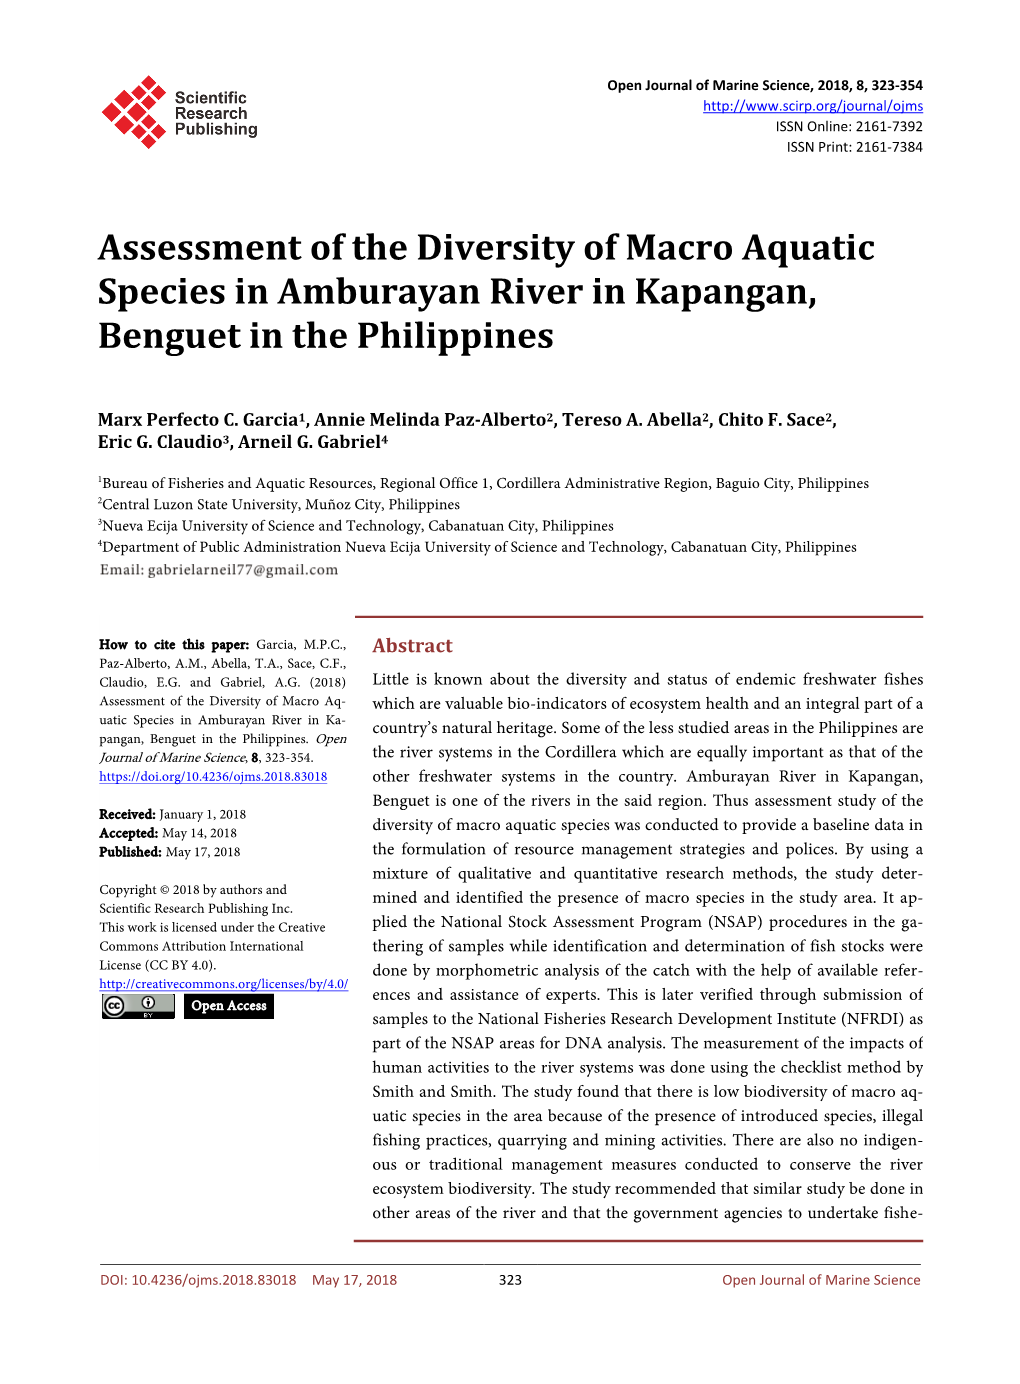 Assessment of the Diversity of Macro Aquatic Species in Amburayan River in Kapangan, Benguet in the Philippines